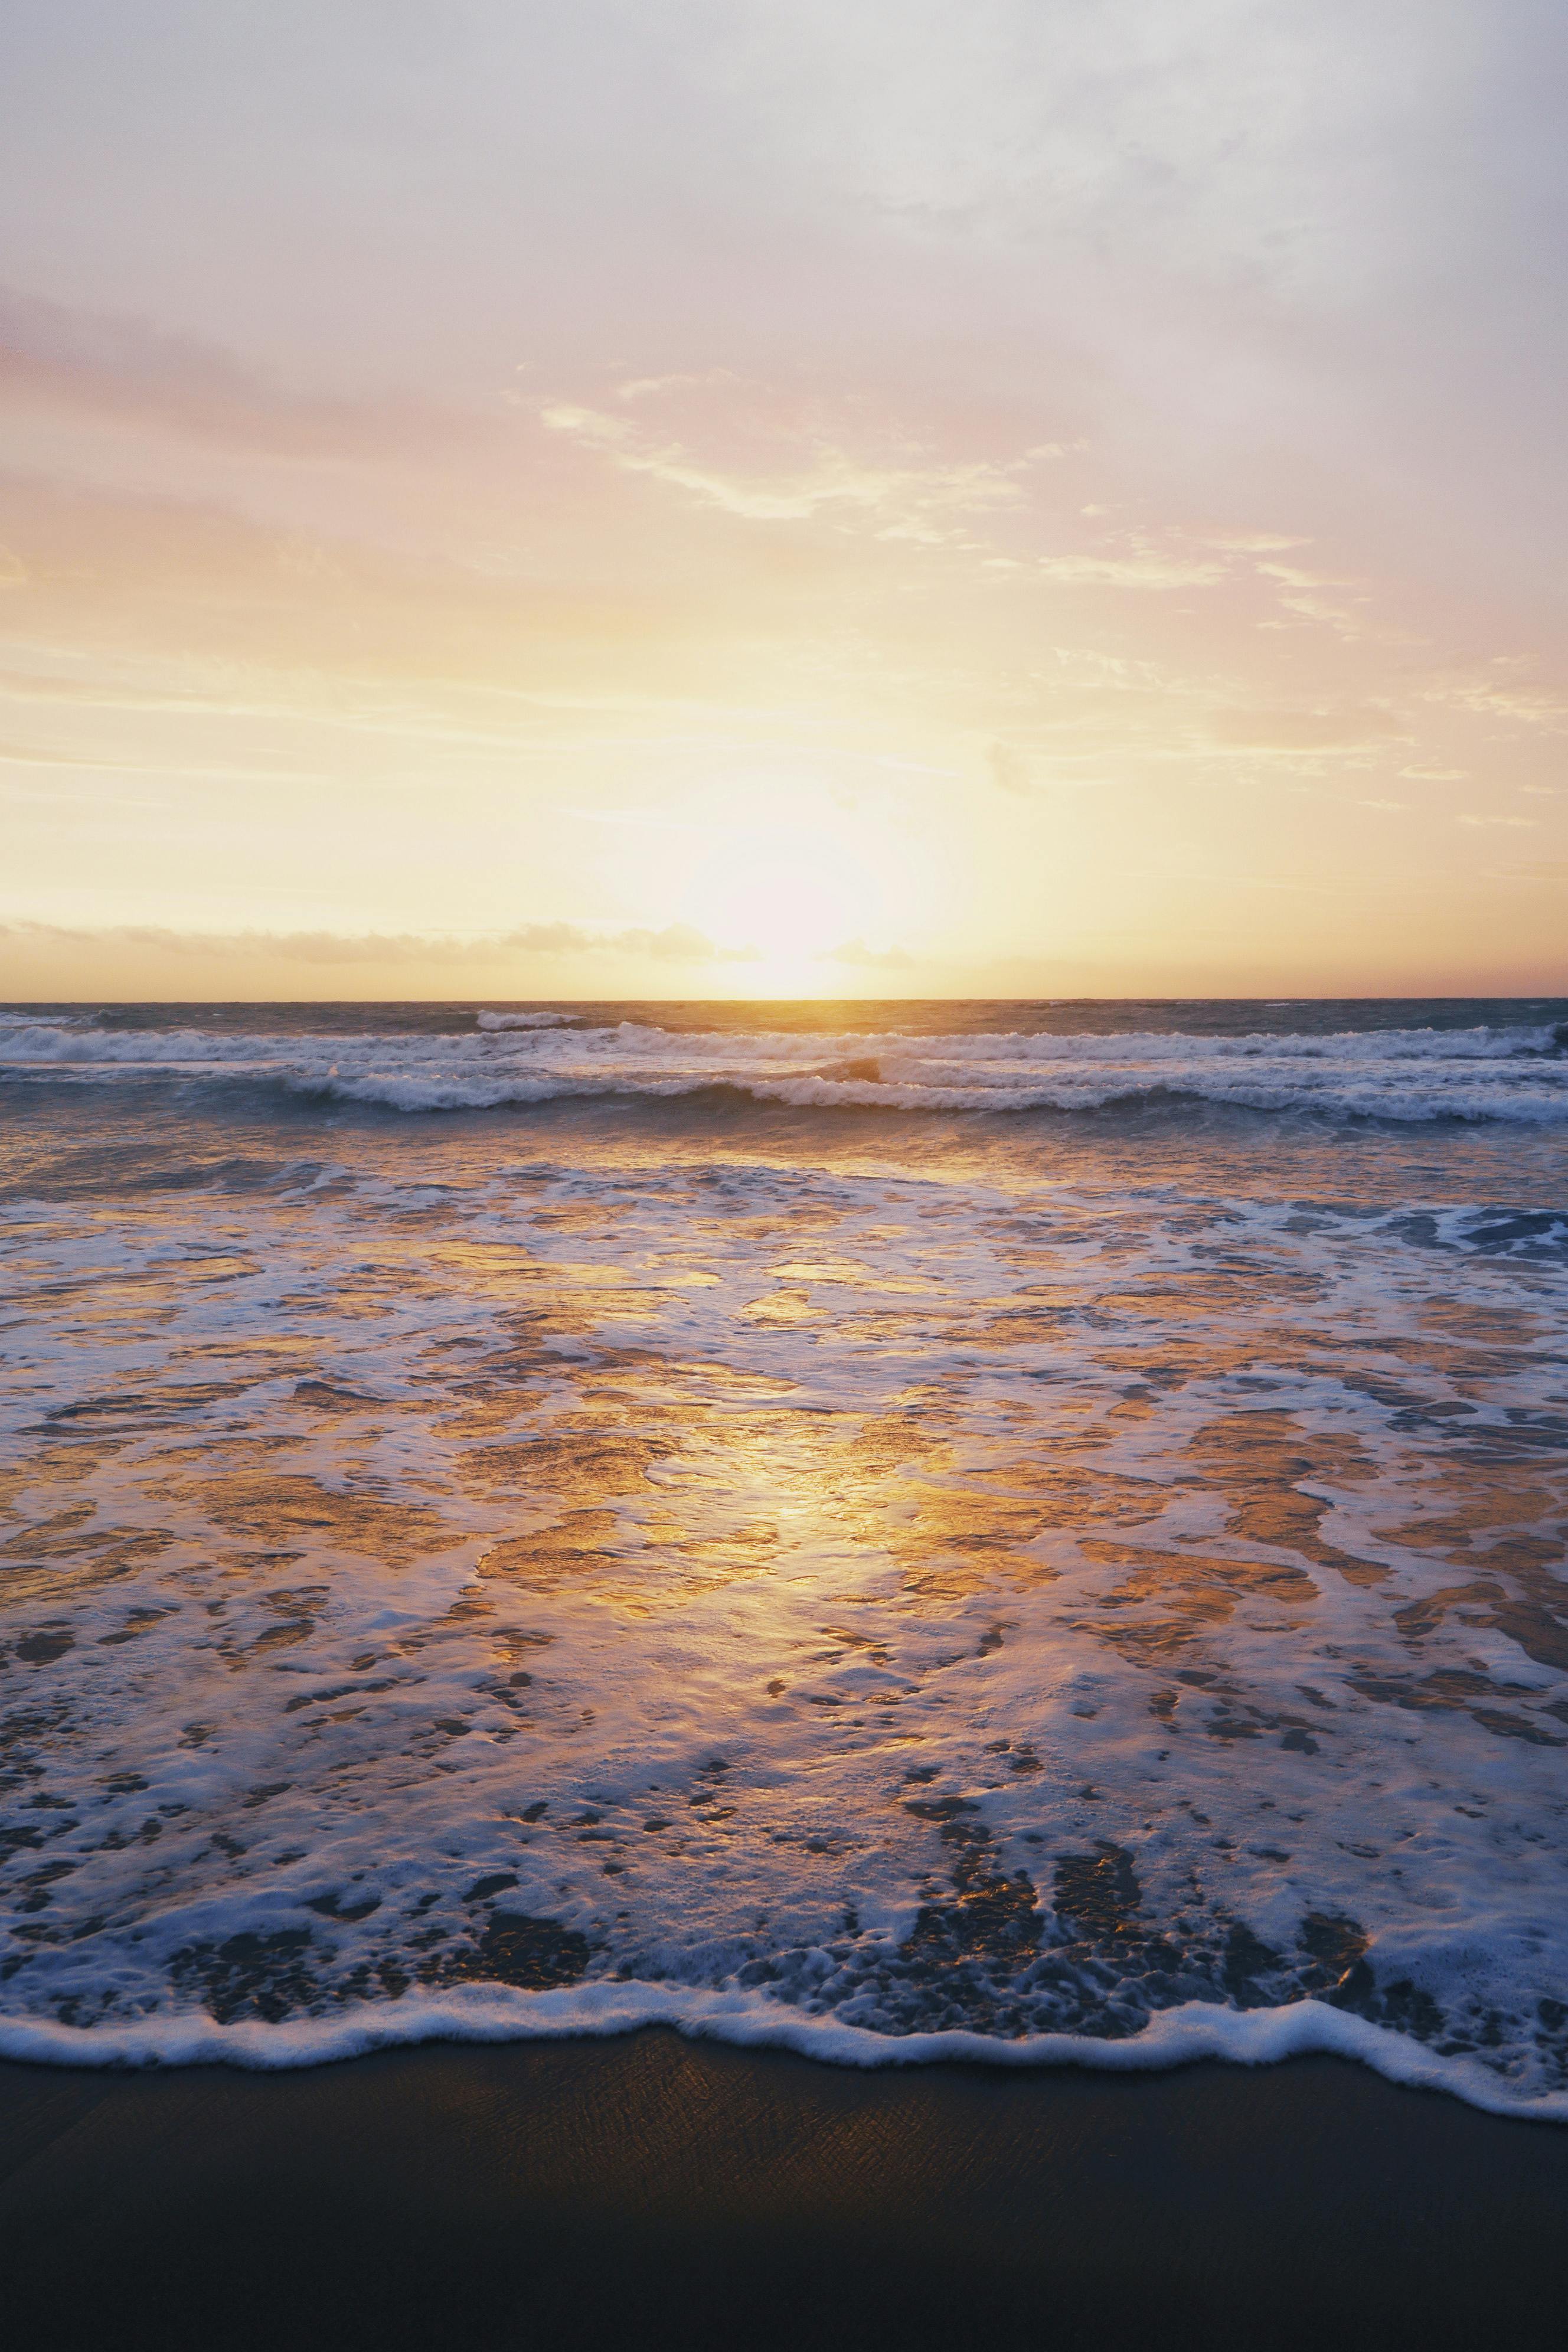 Beach Sunset Photos, Download The BEST Free Beach Sunset Stock ...